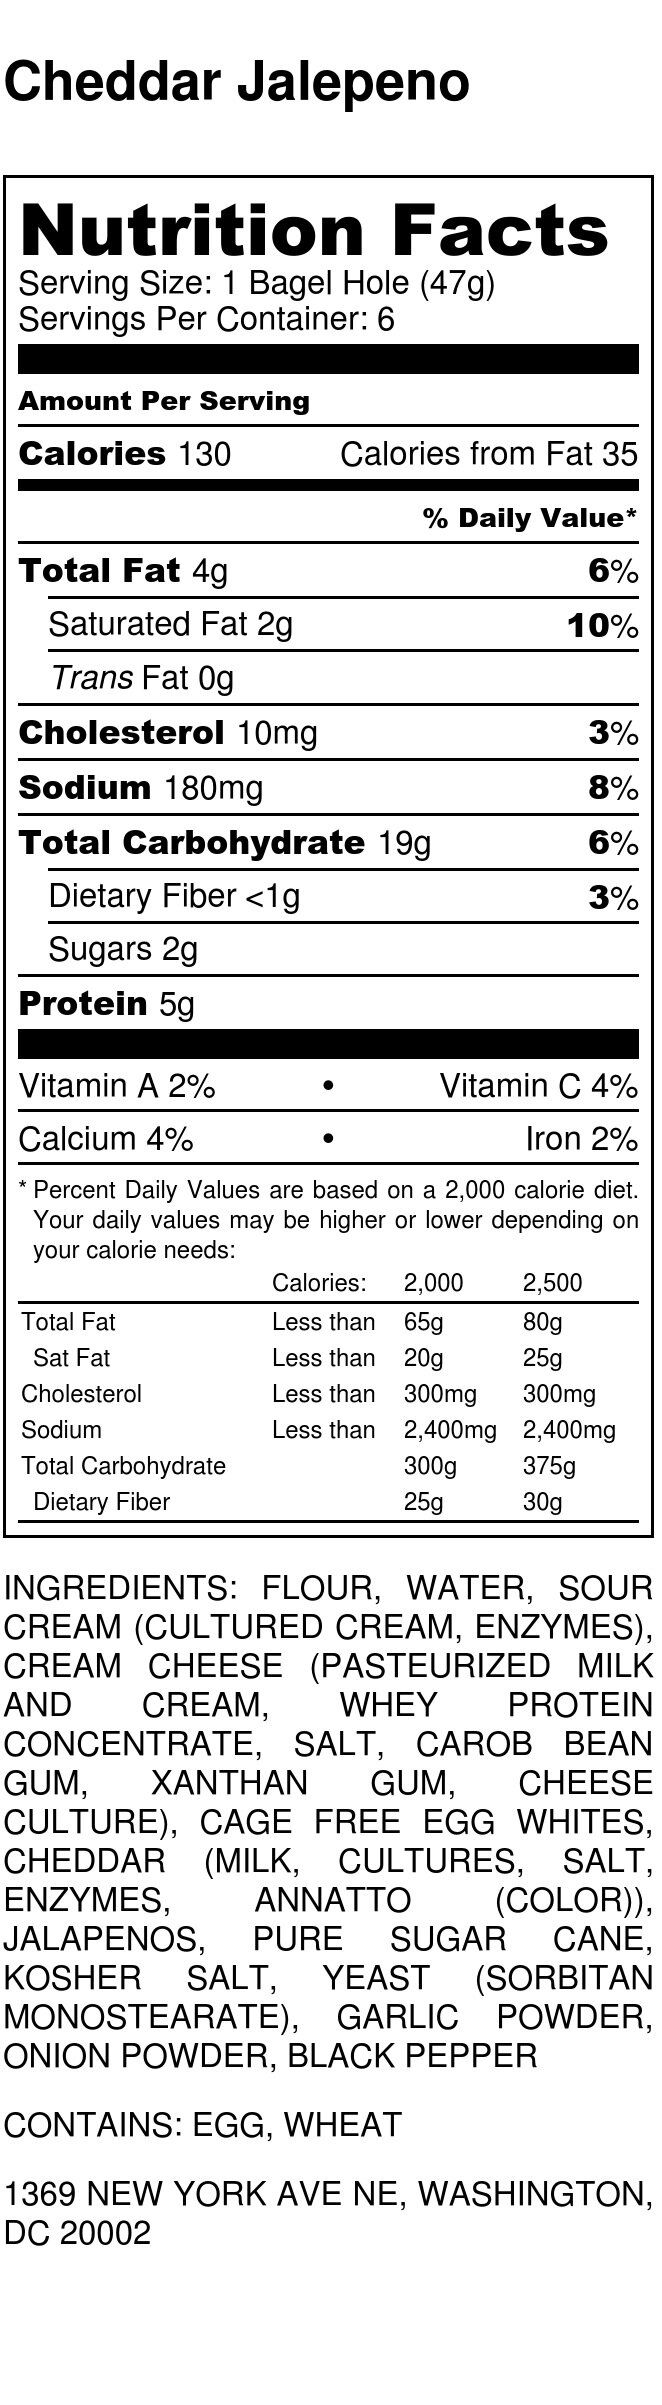 Cheddar Jalepeno - Nutrition Label.jpg